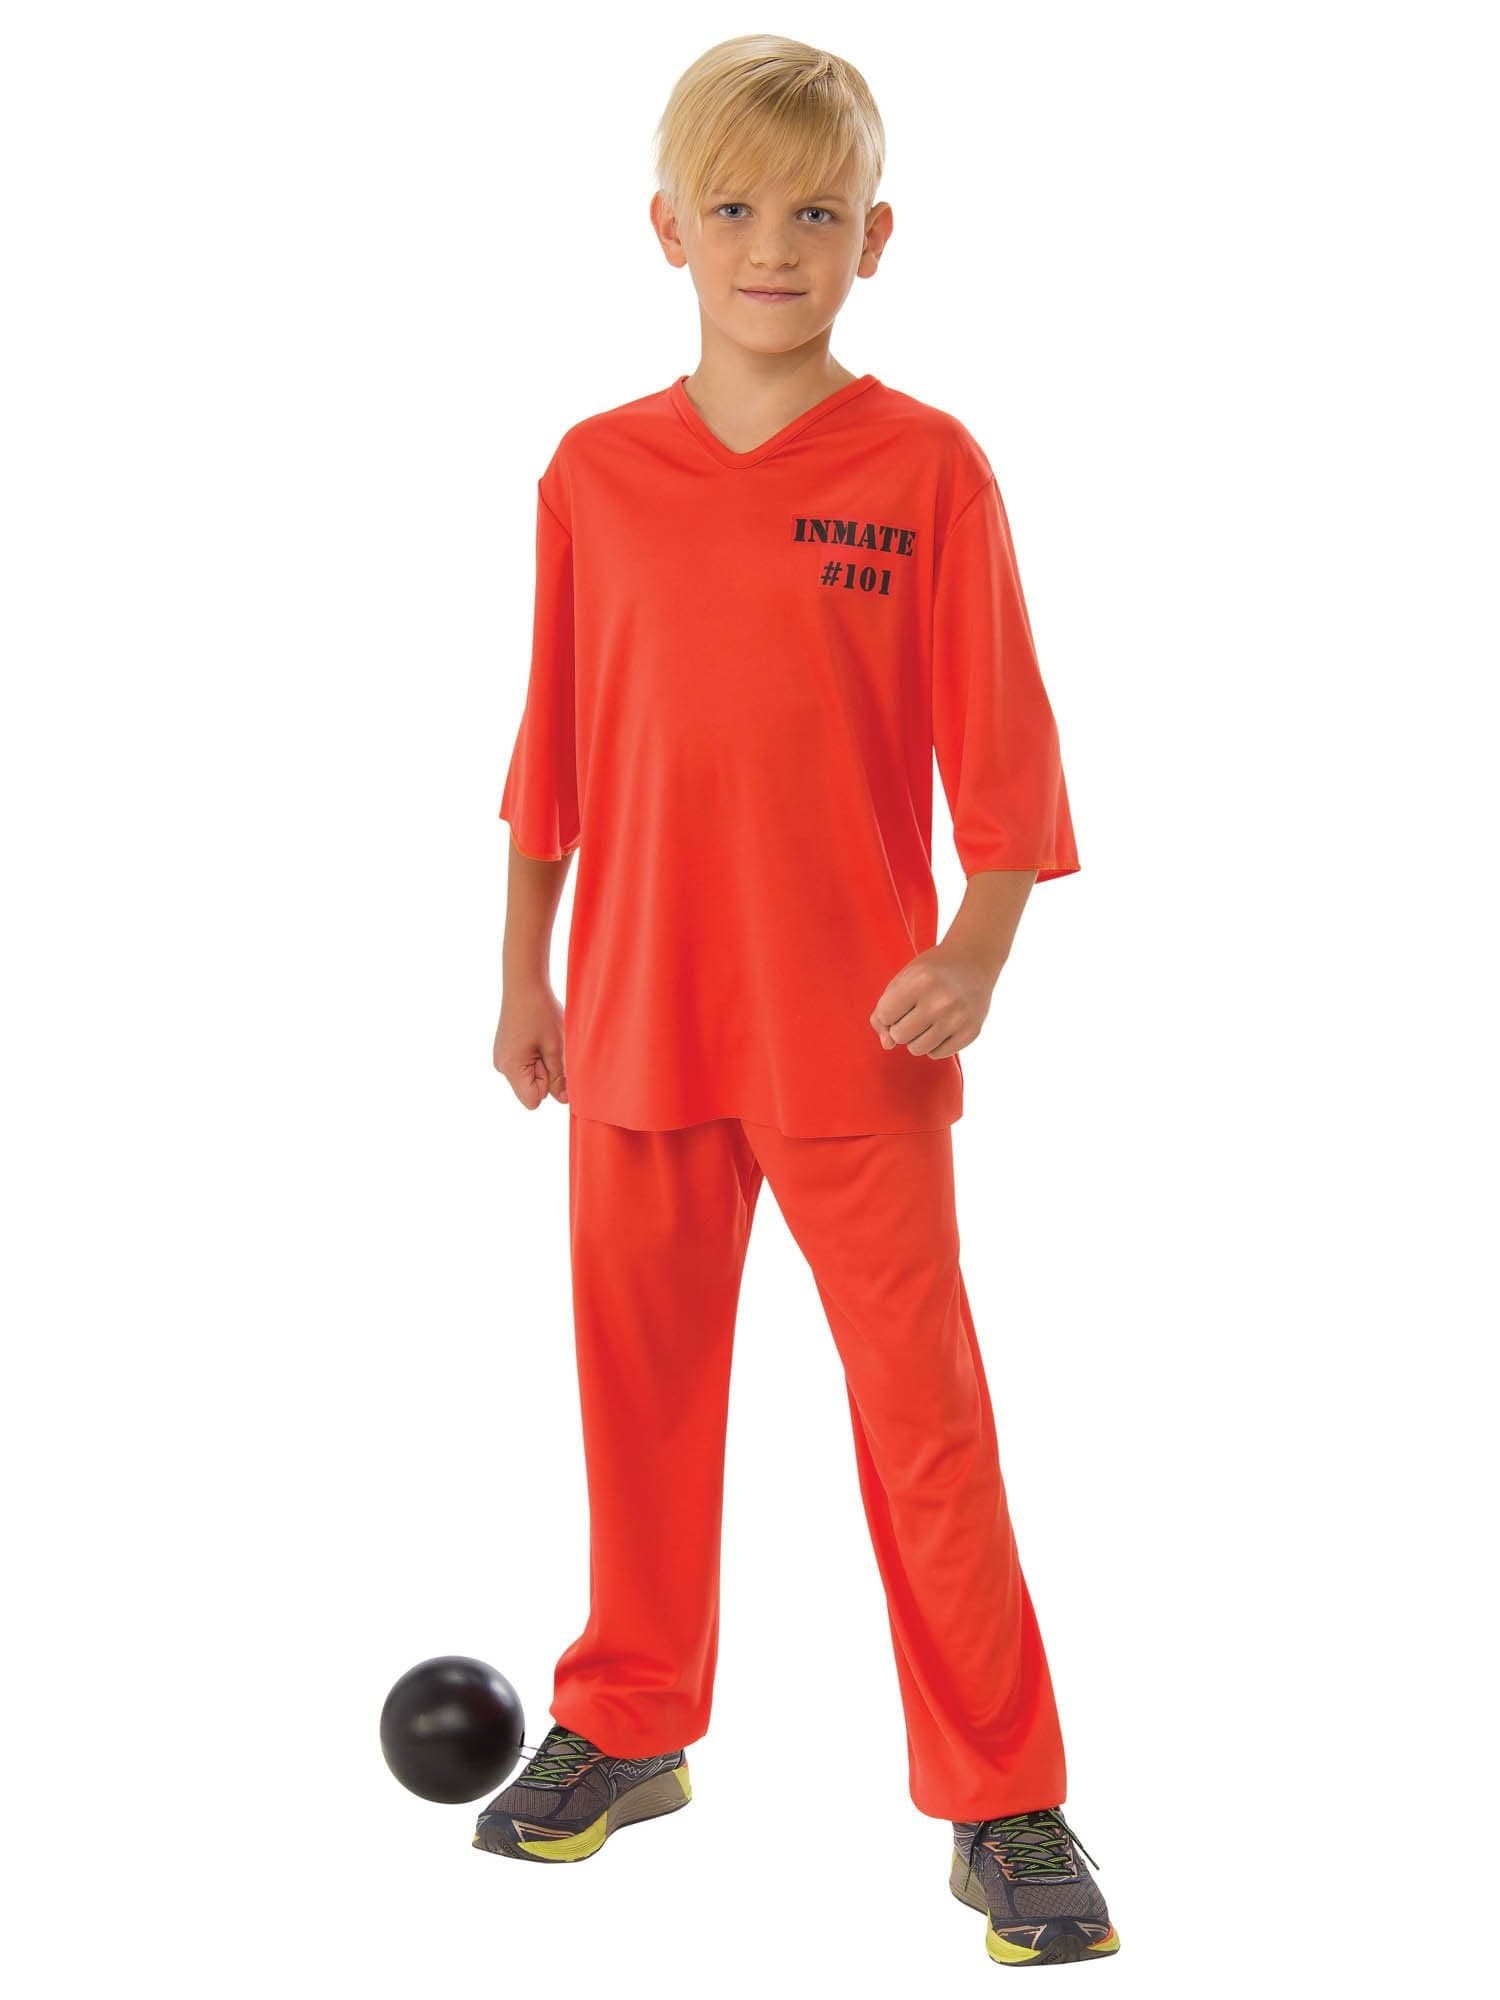 Kids Inmate 101 Costume - costumes.com